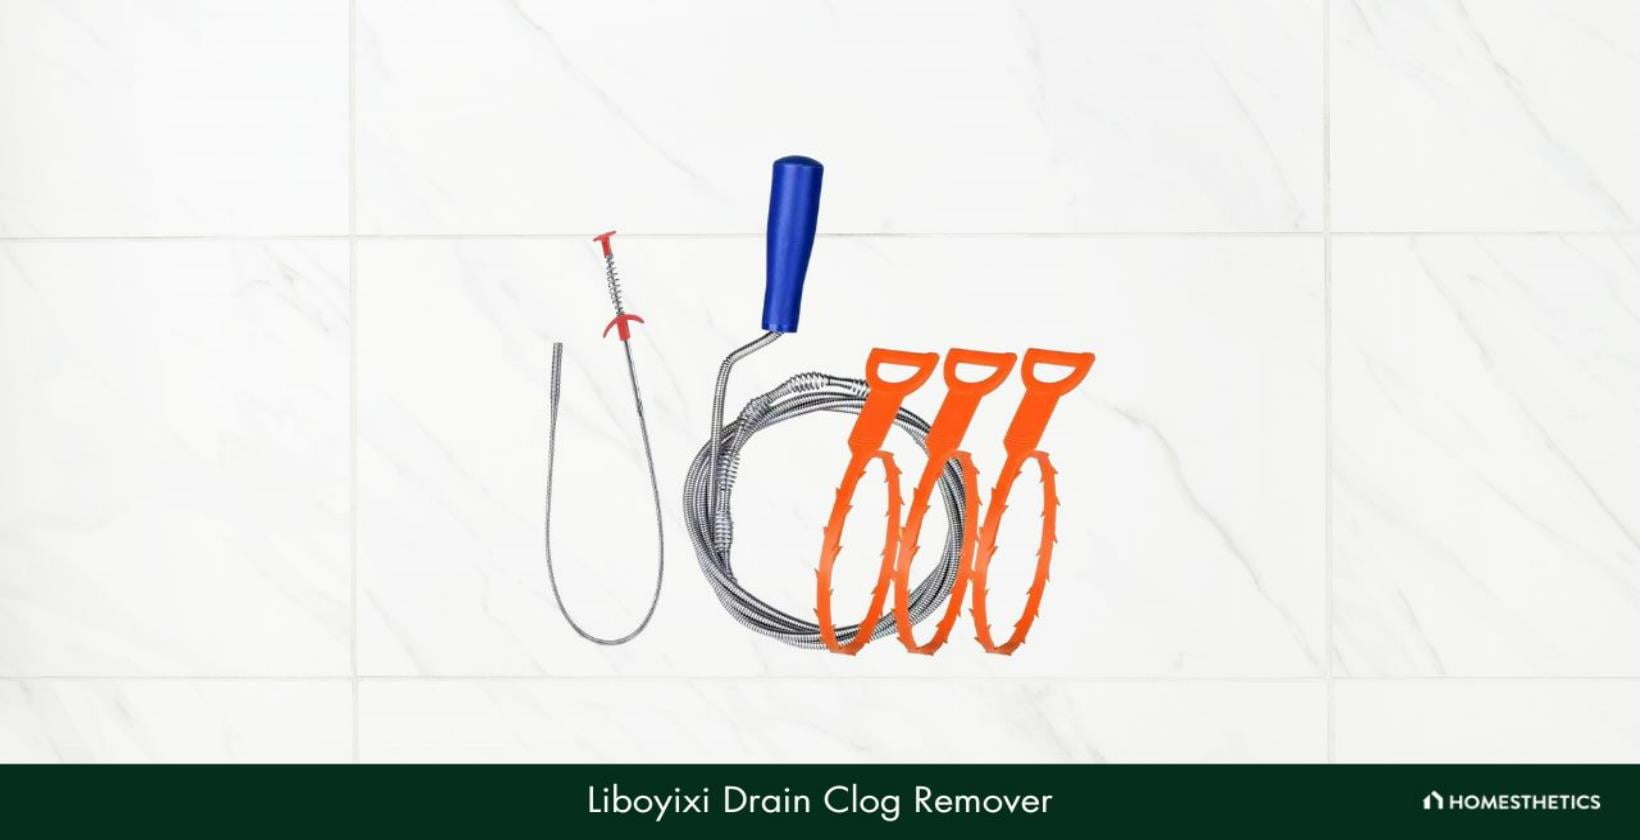 Liboyixi Drain Clog Remover